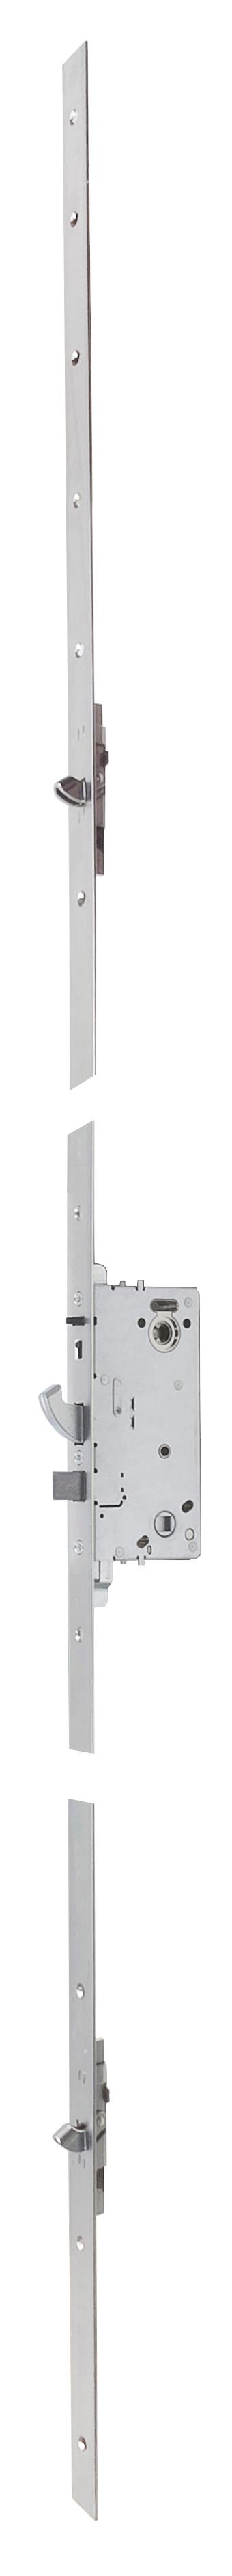 Ruko YD 3-punkts låslåda - 2115 mm H, D 50 mm, 25 mm stolpe